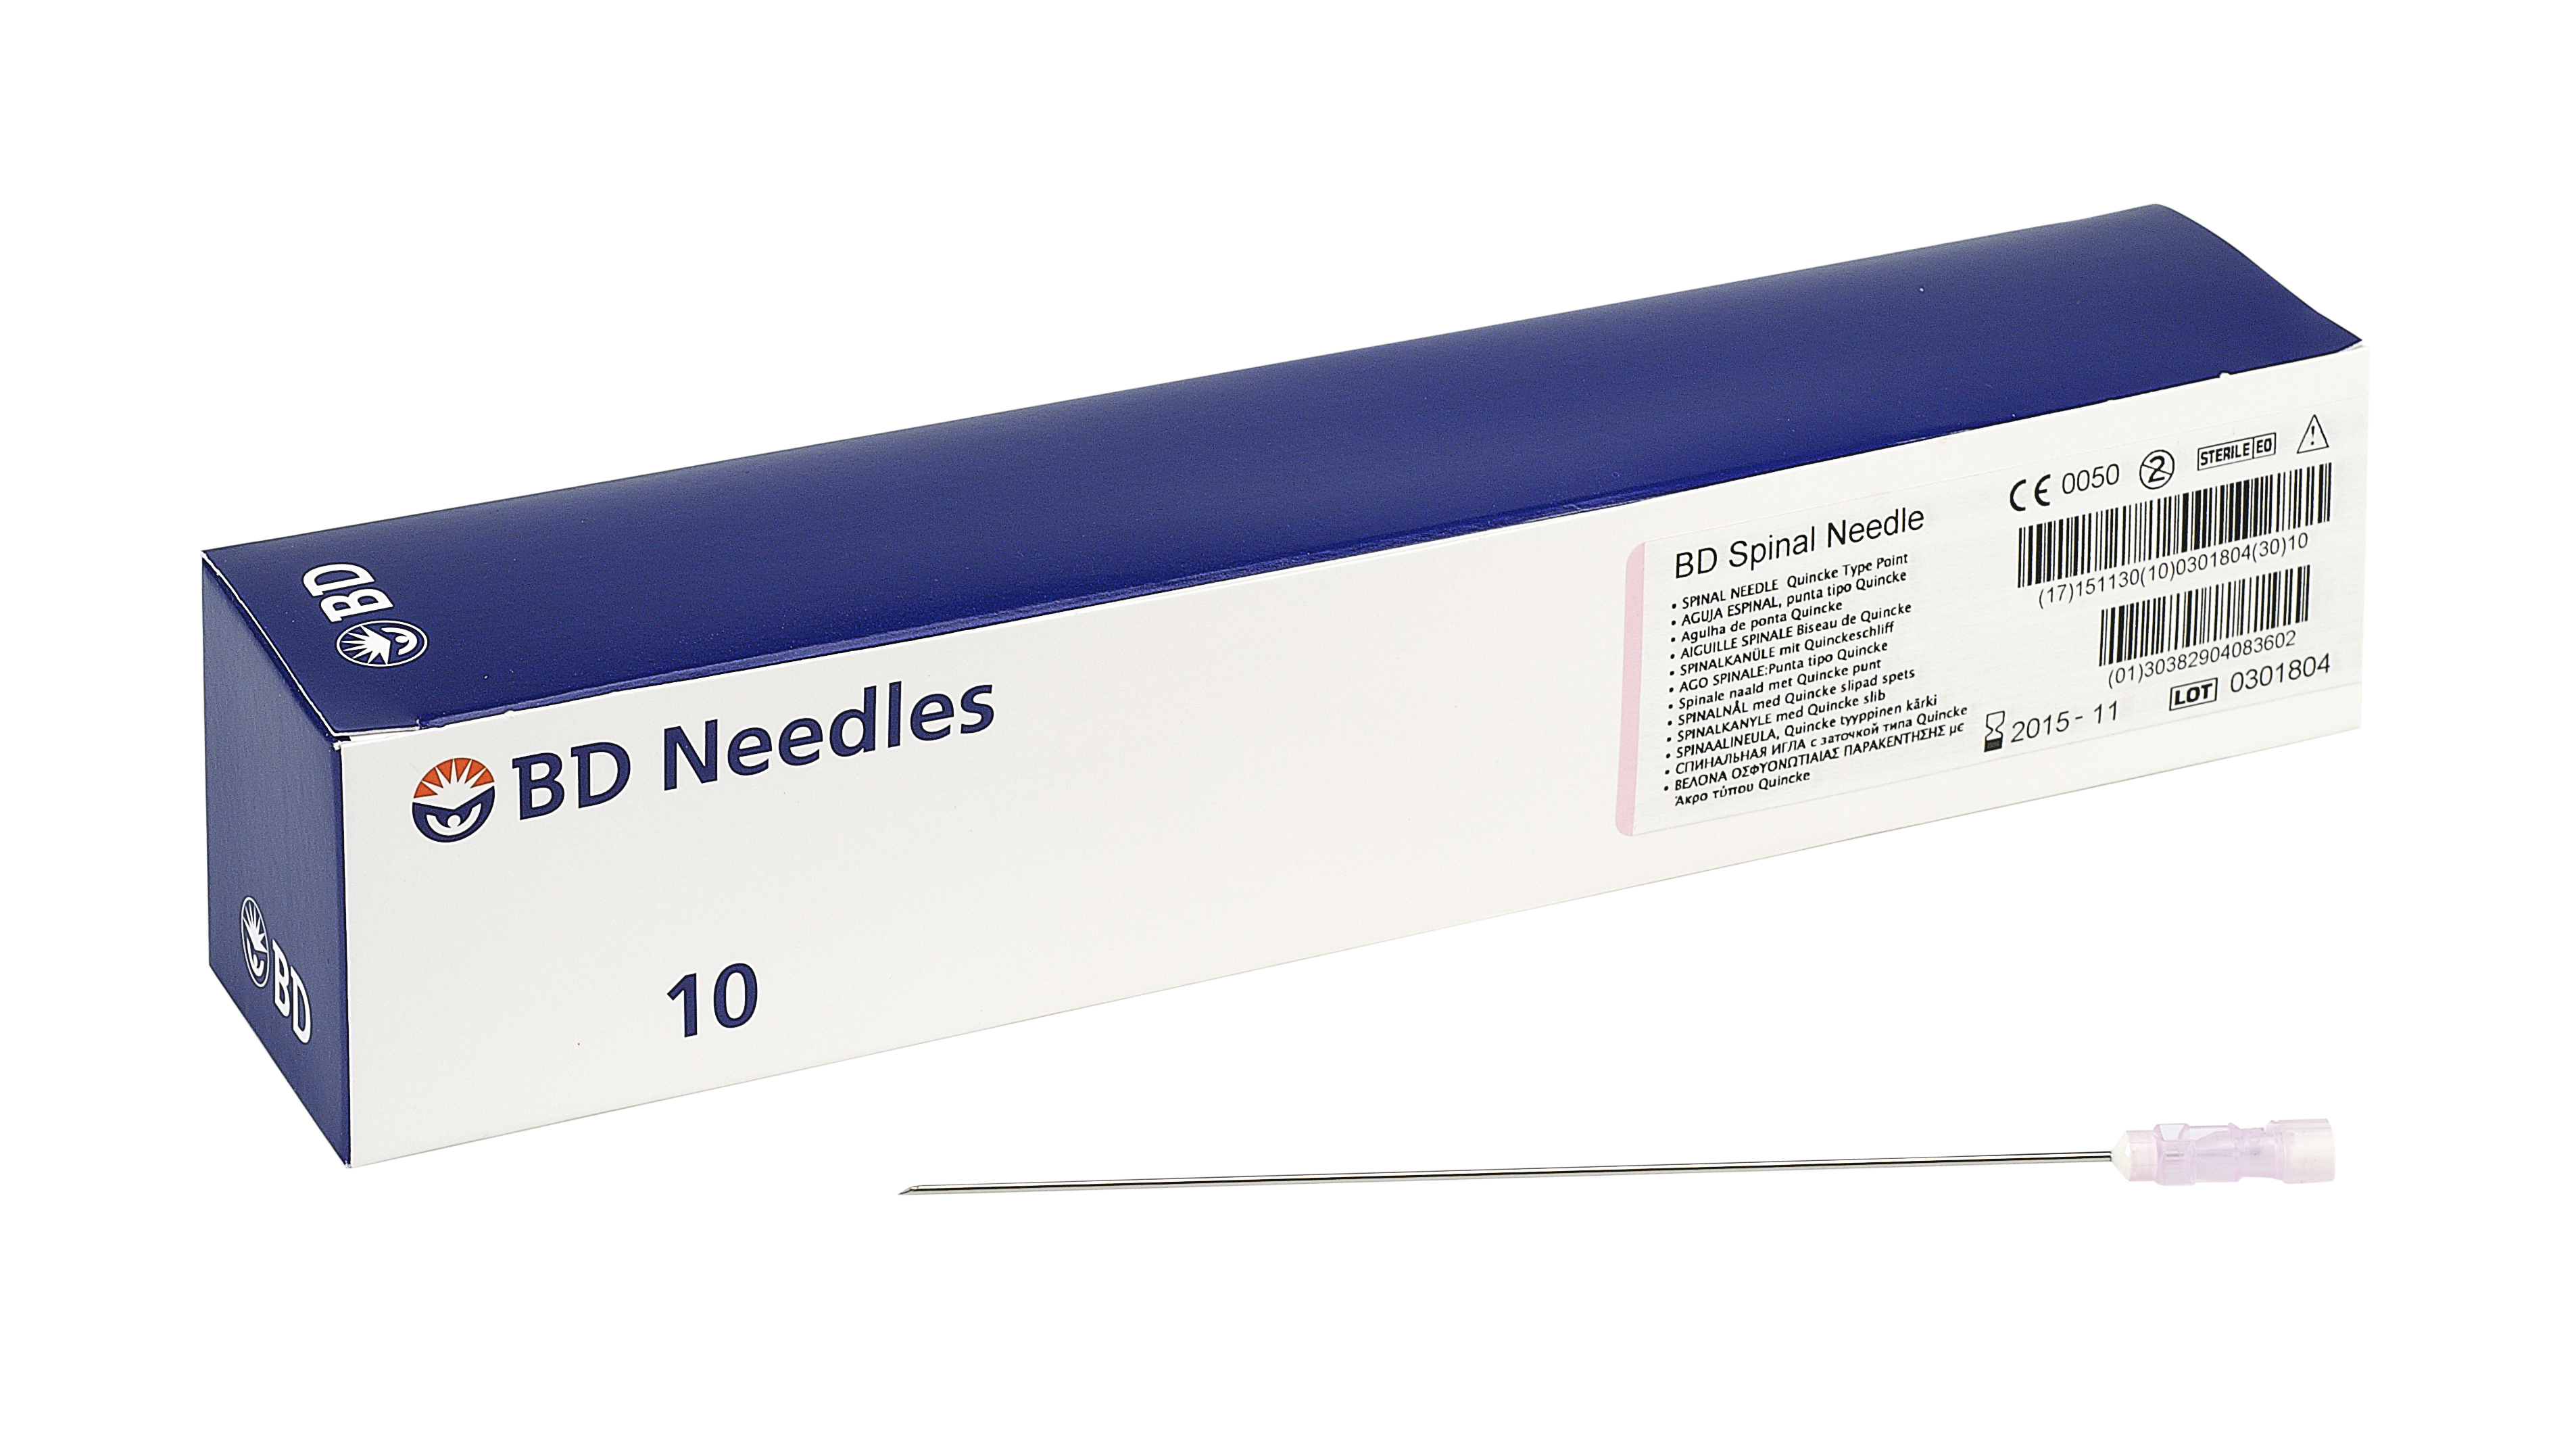 BD Needle Spinal, 20G x 6, 10/pk